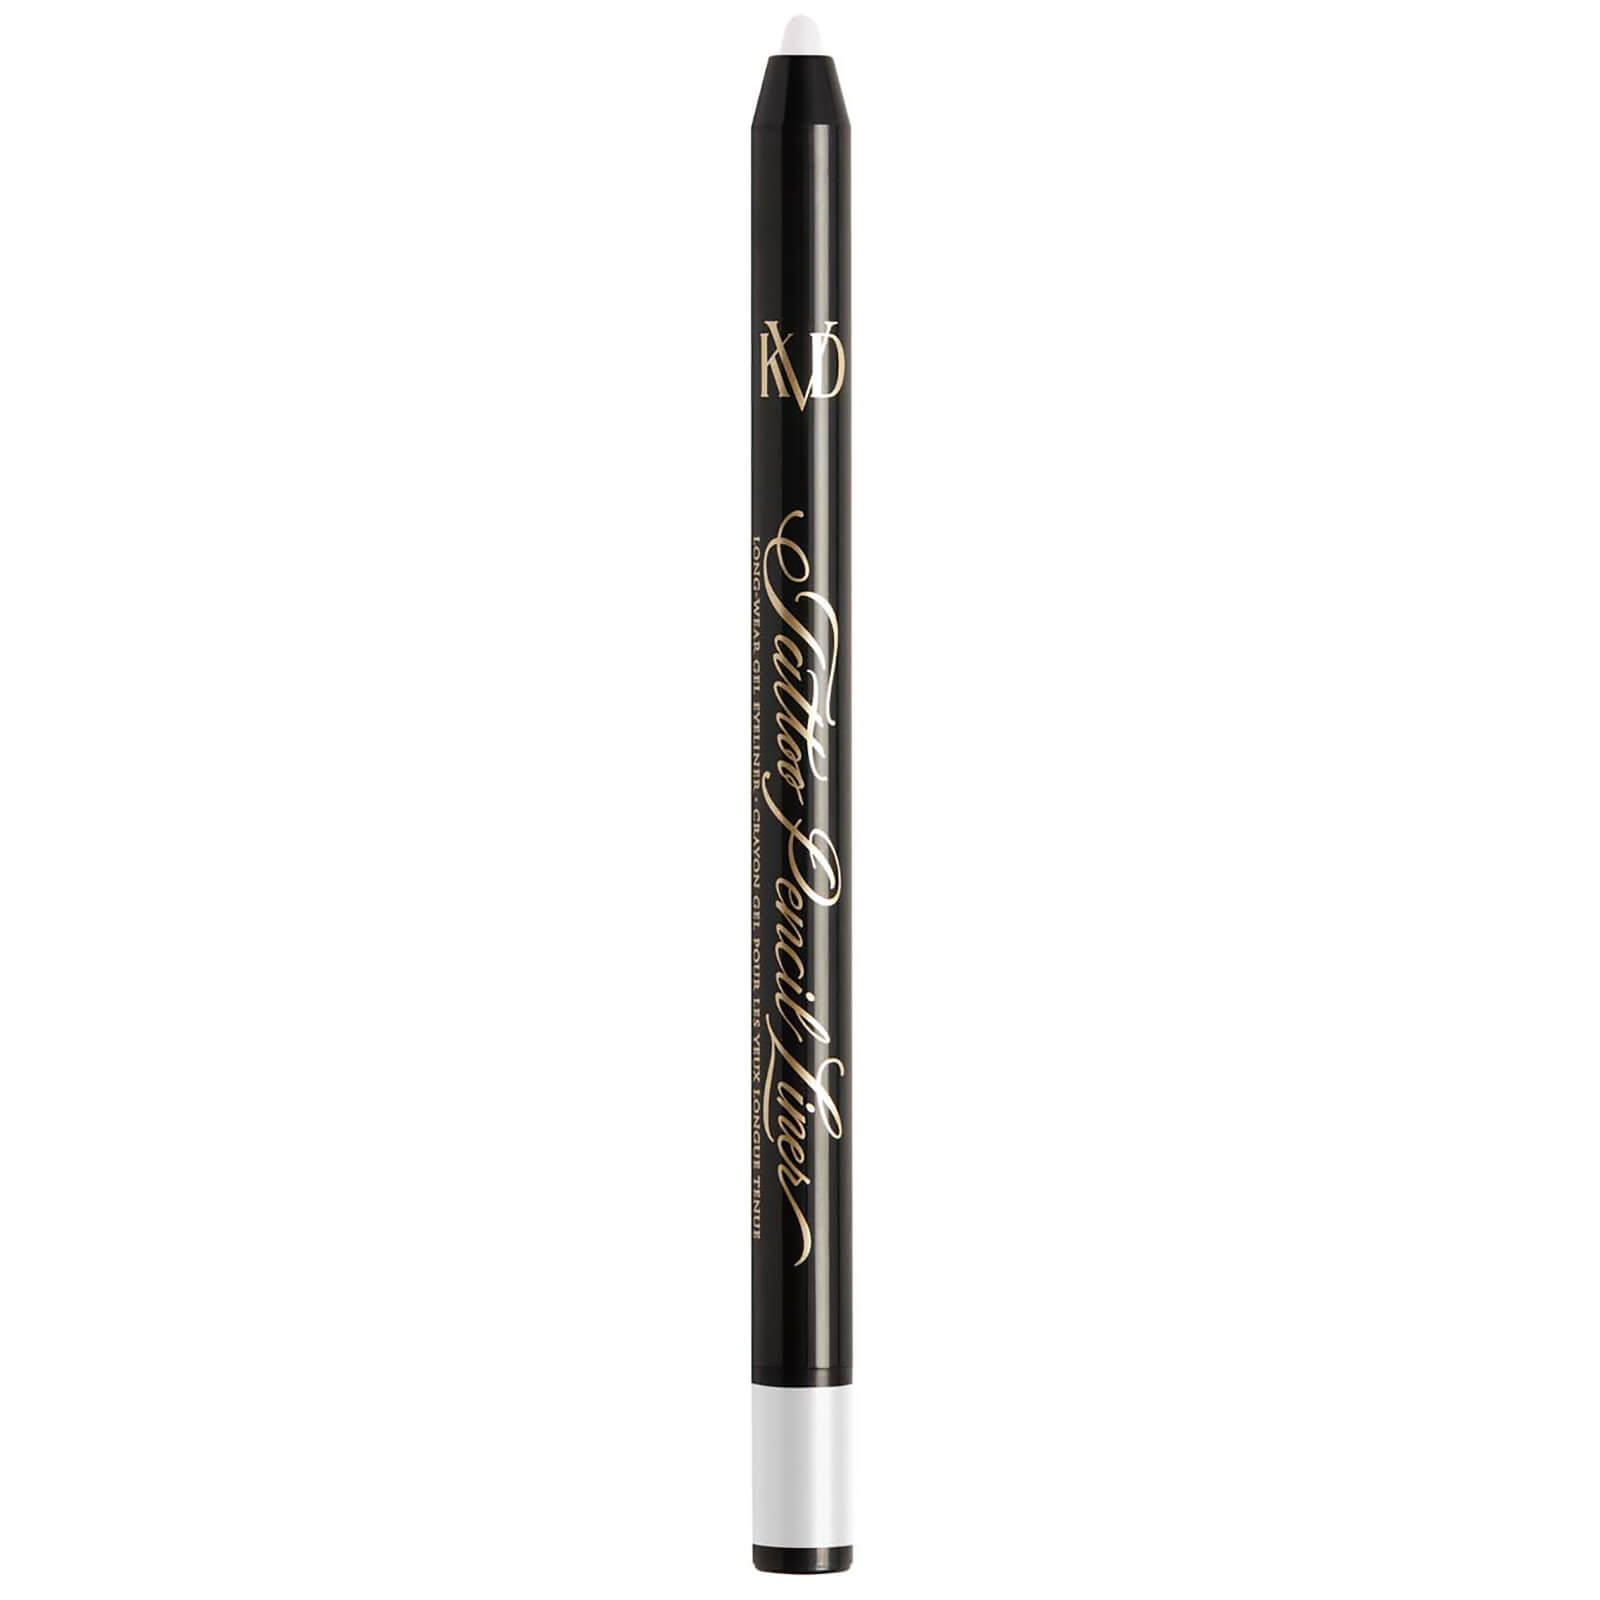 KVD Beauty Tattoo Pencil Liner Long-Wear Gel Eyeliner 0.5g (Various Shades) - Pearlspar White 35